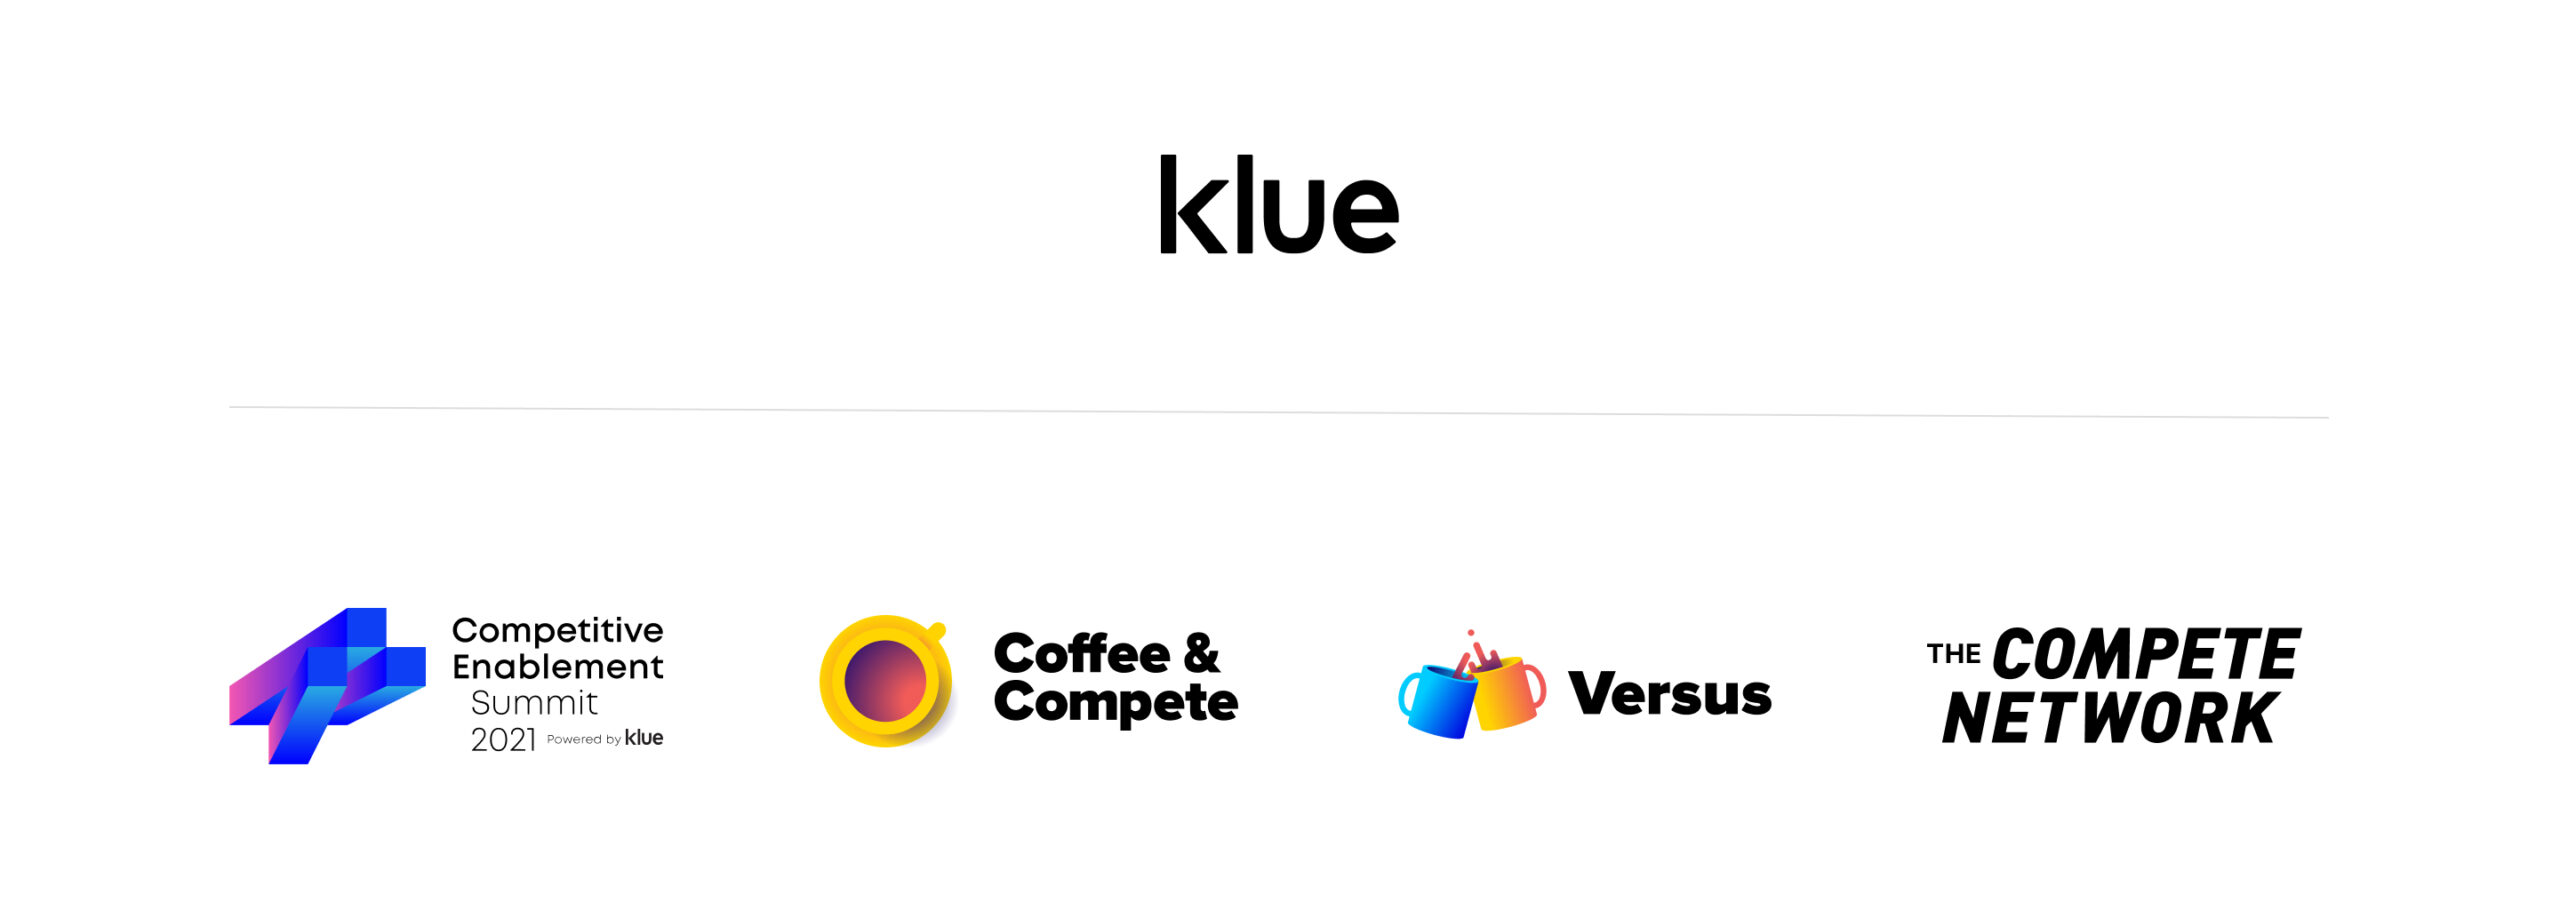 Klue_Branding-SubBrand-Overview